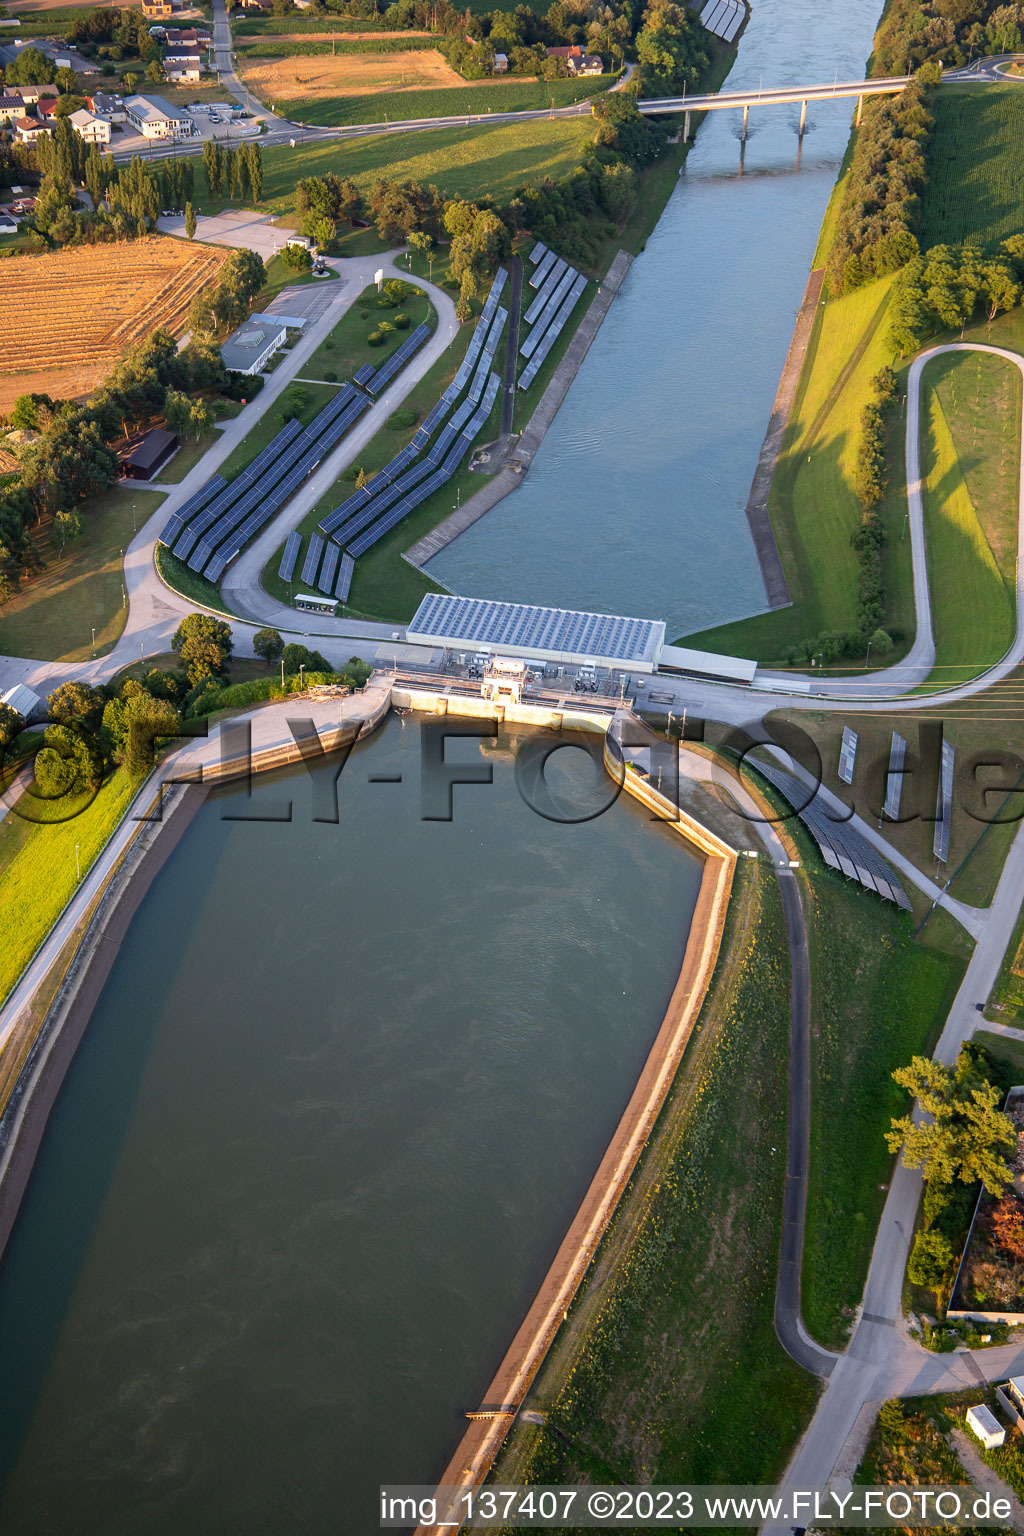 Luftbild von Wasserkraftwerk HE Zlatoličje mit Photovoltaik-Panels an der Uferböschung am Drau-Kanal HE Zlatoličje in Starše, Slowenien